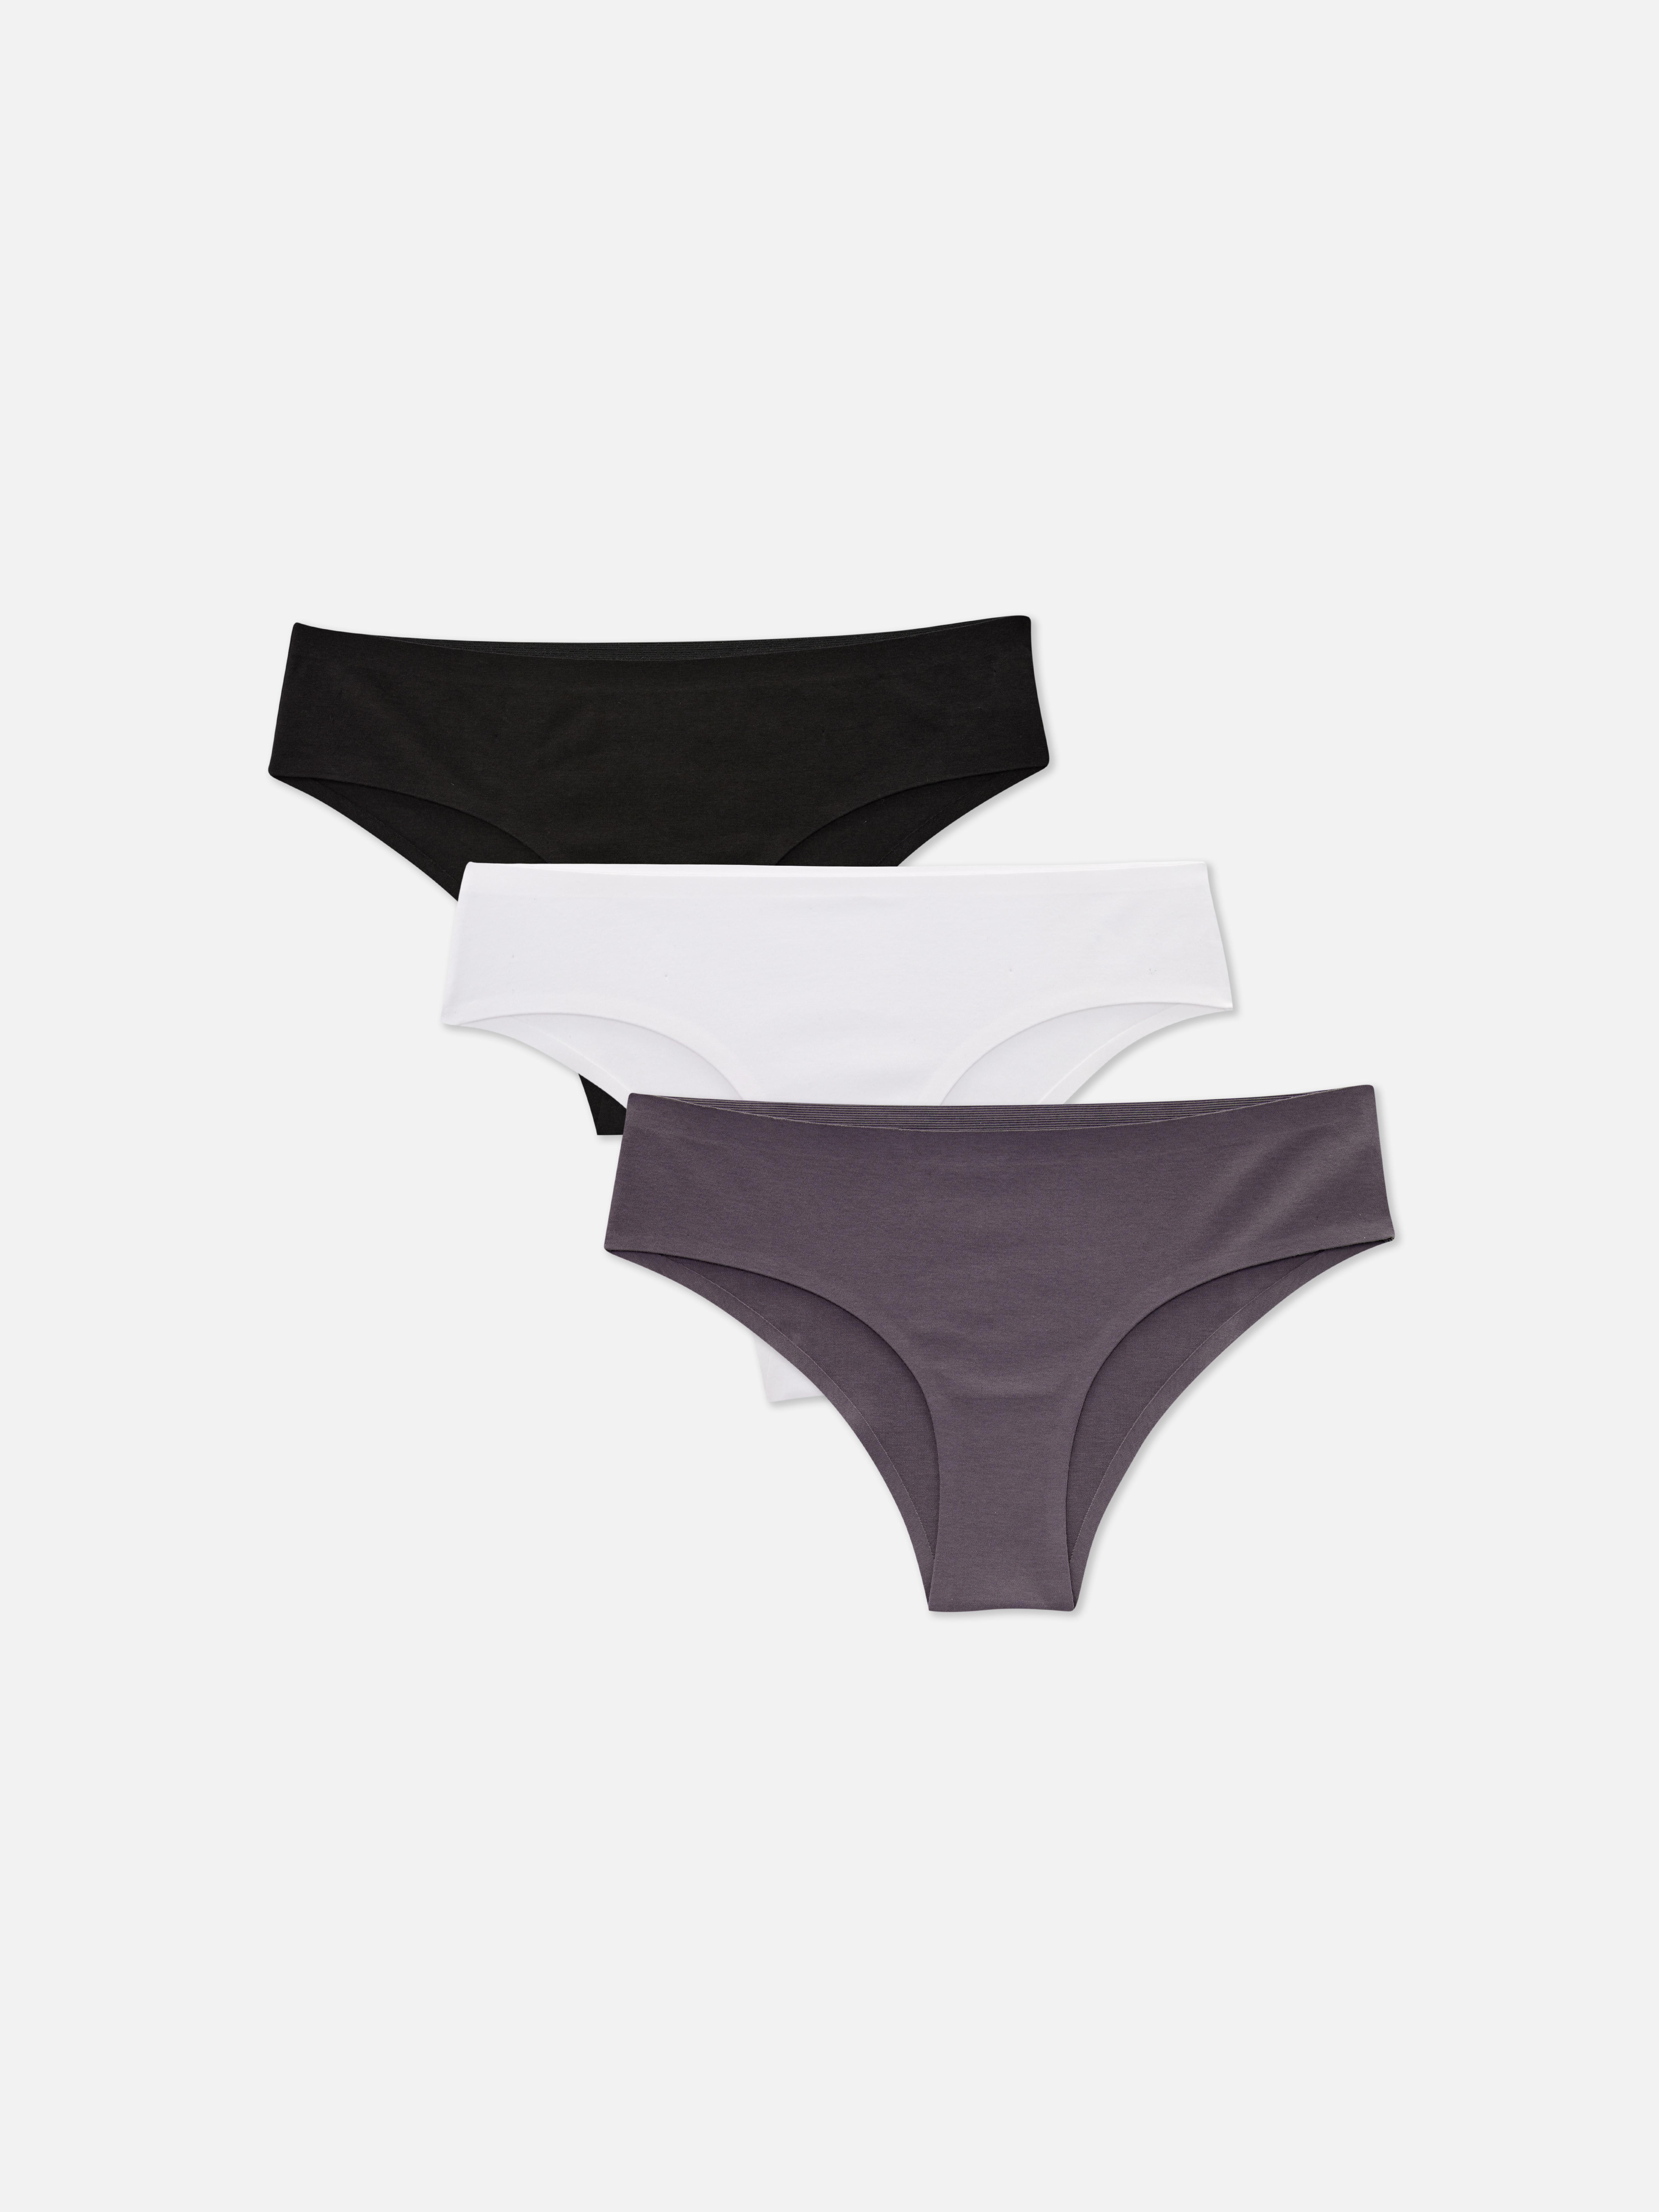 Women's Lace Knickers Panties Brazillian Full Brief Soft Underwear Primark